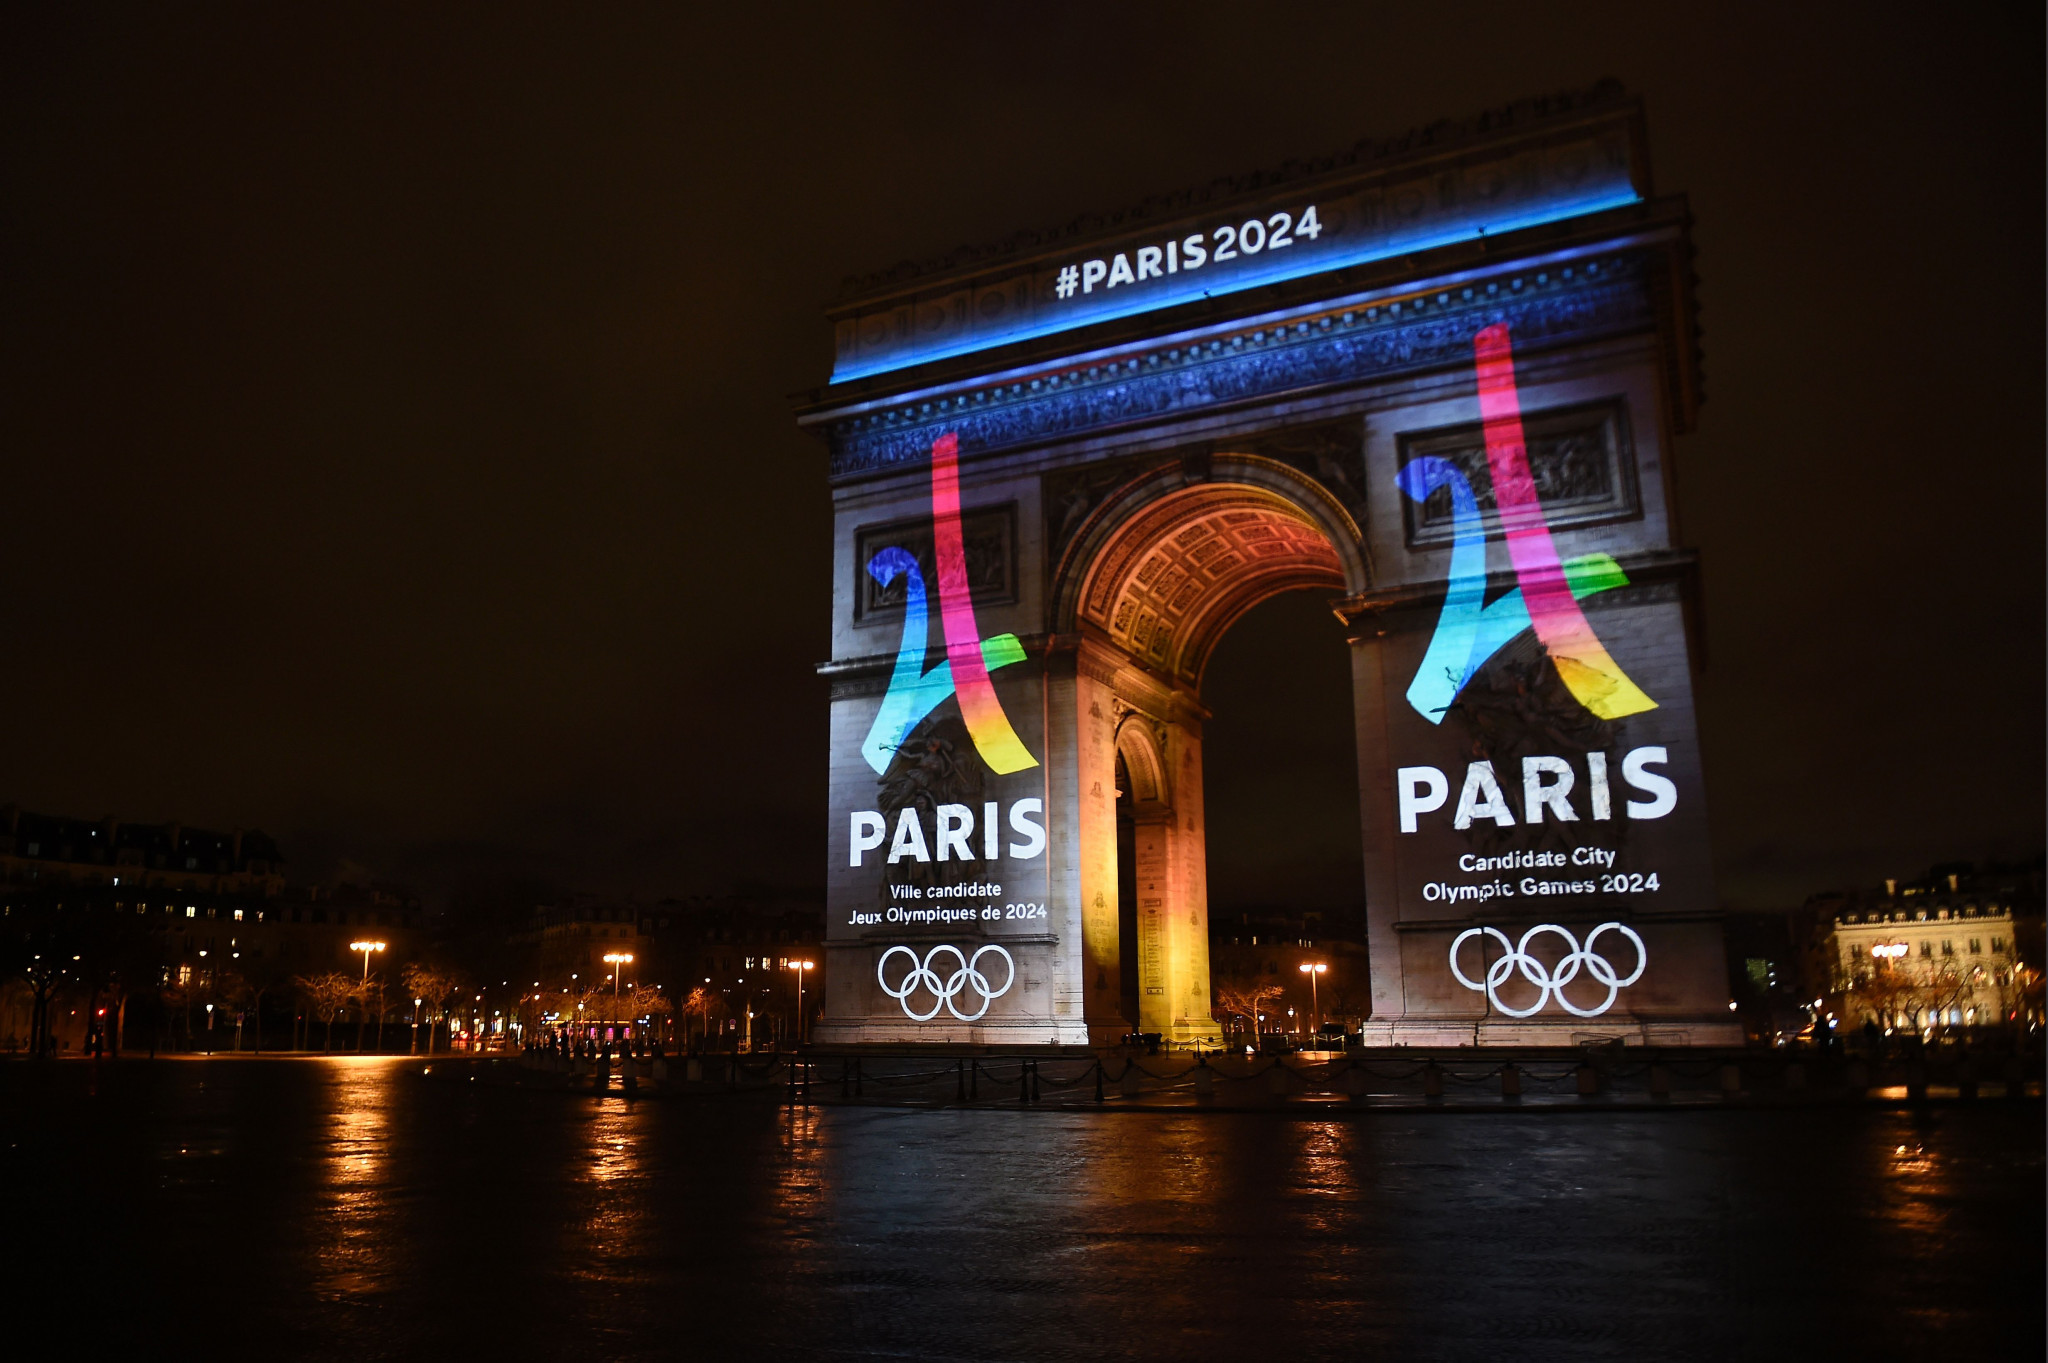 City of Paris launches bienVenue 2024 to showcase venues before Olympics